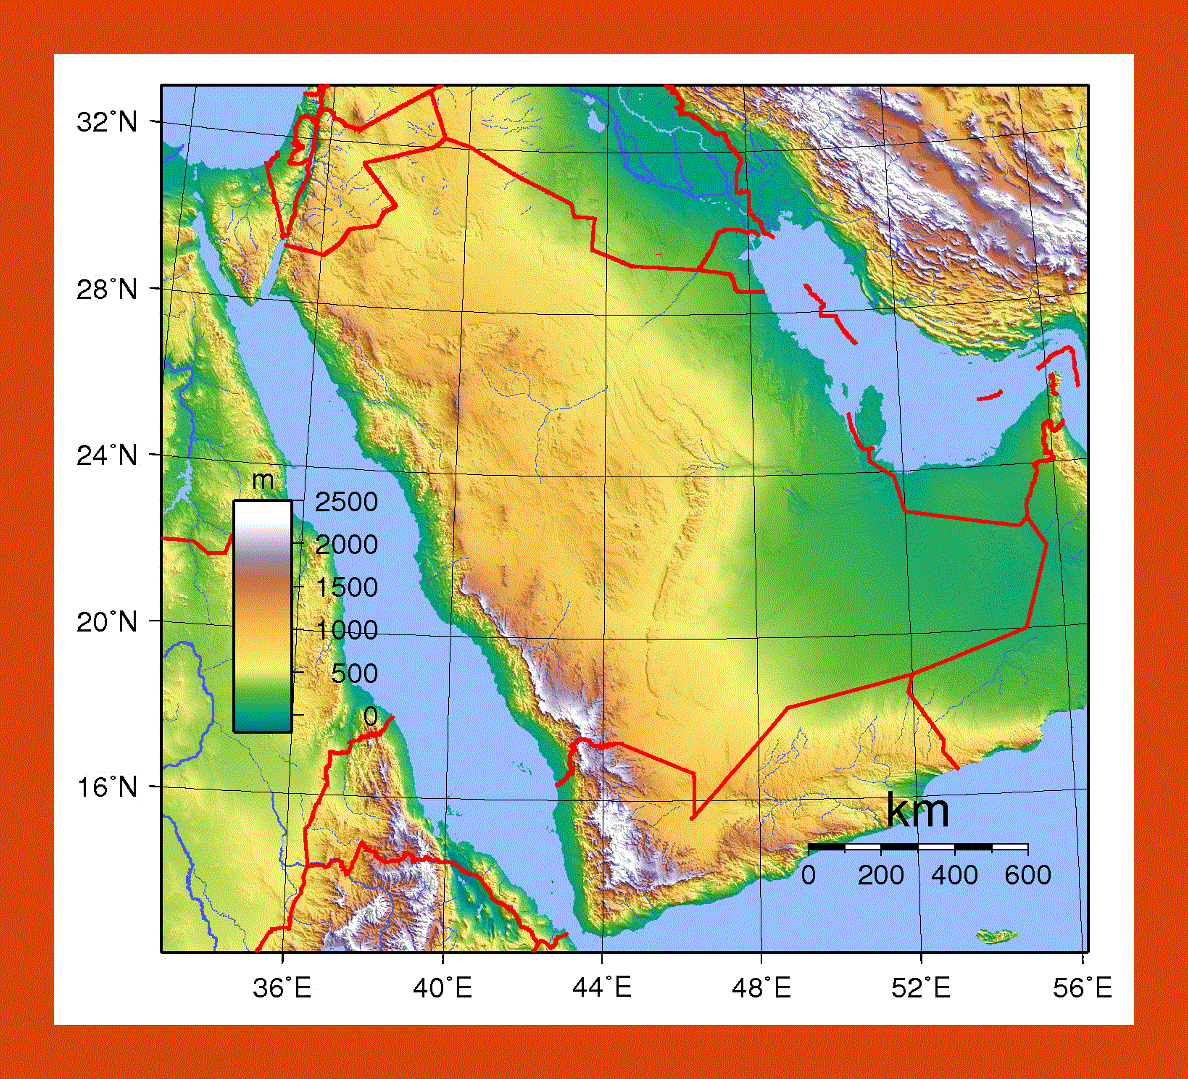 Topographical map of Saudi Arabia